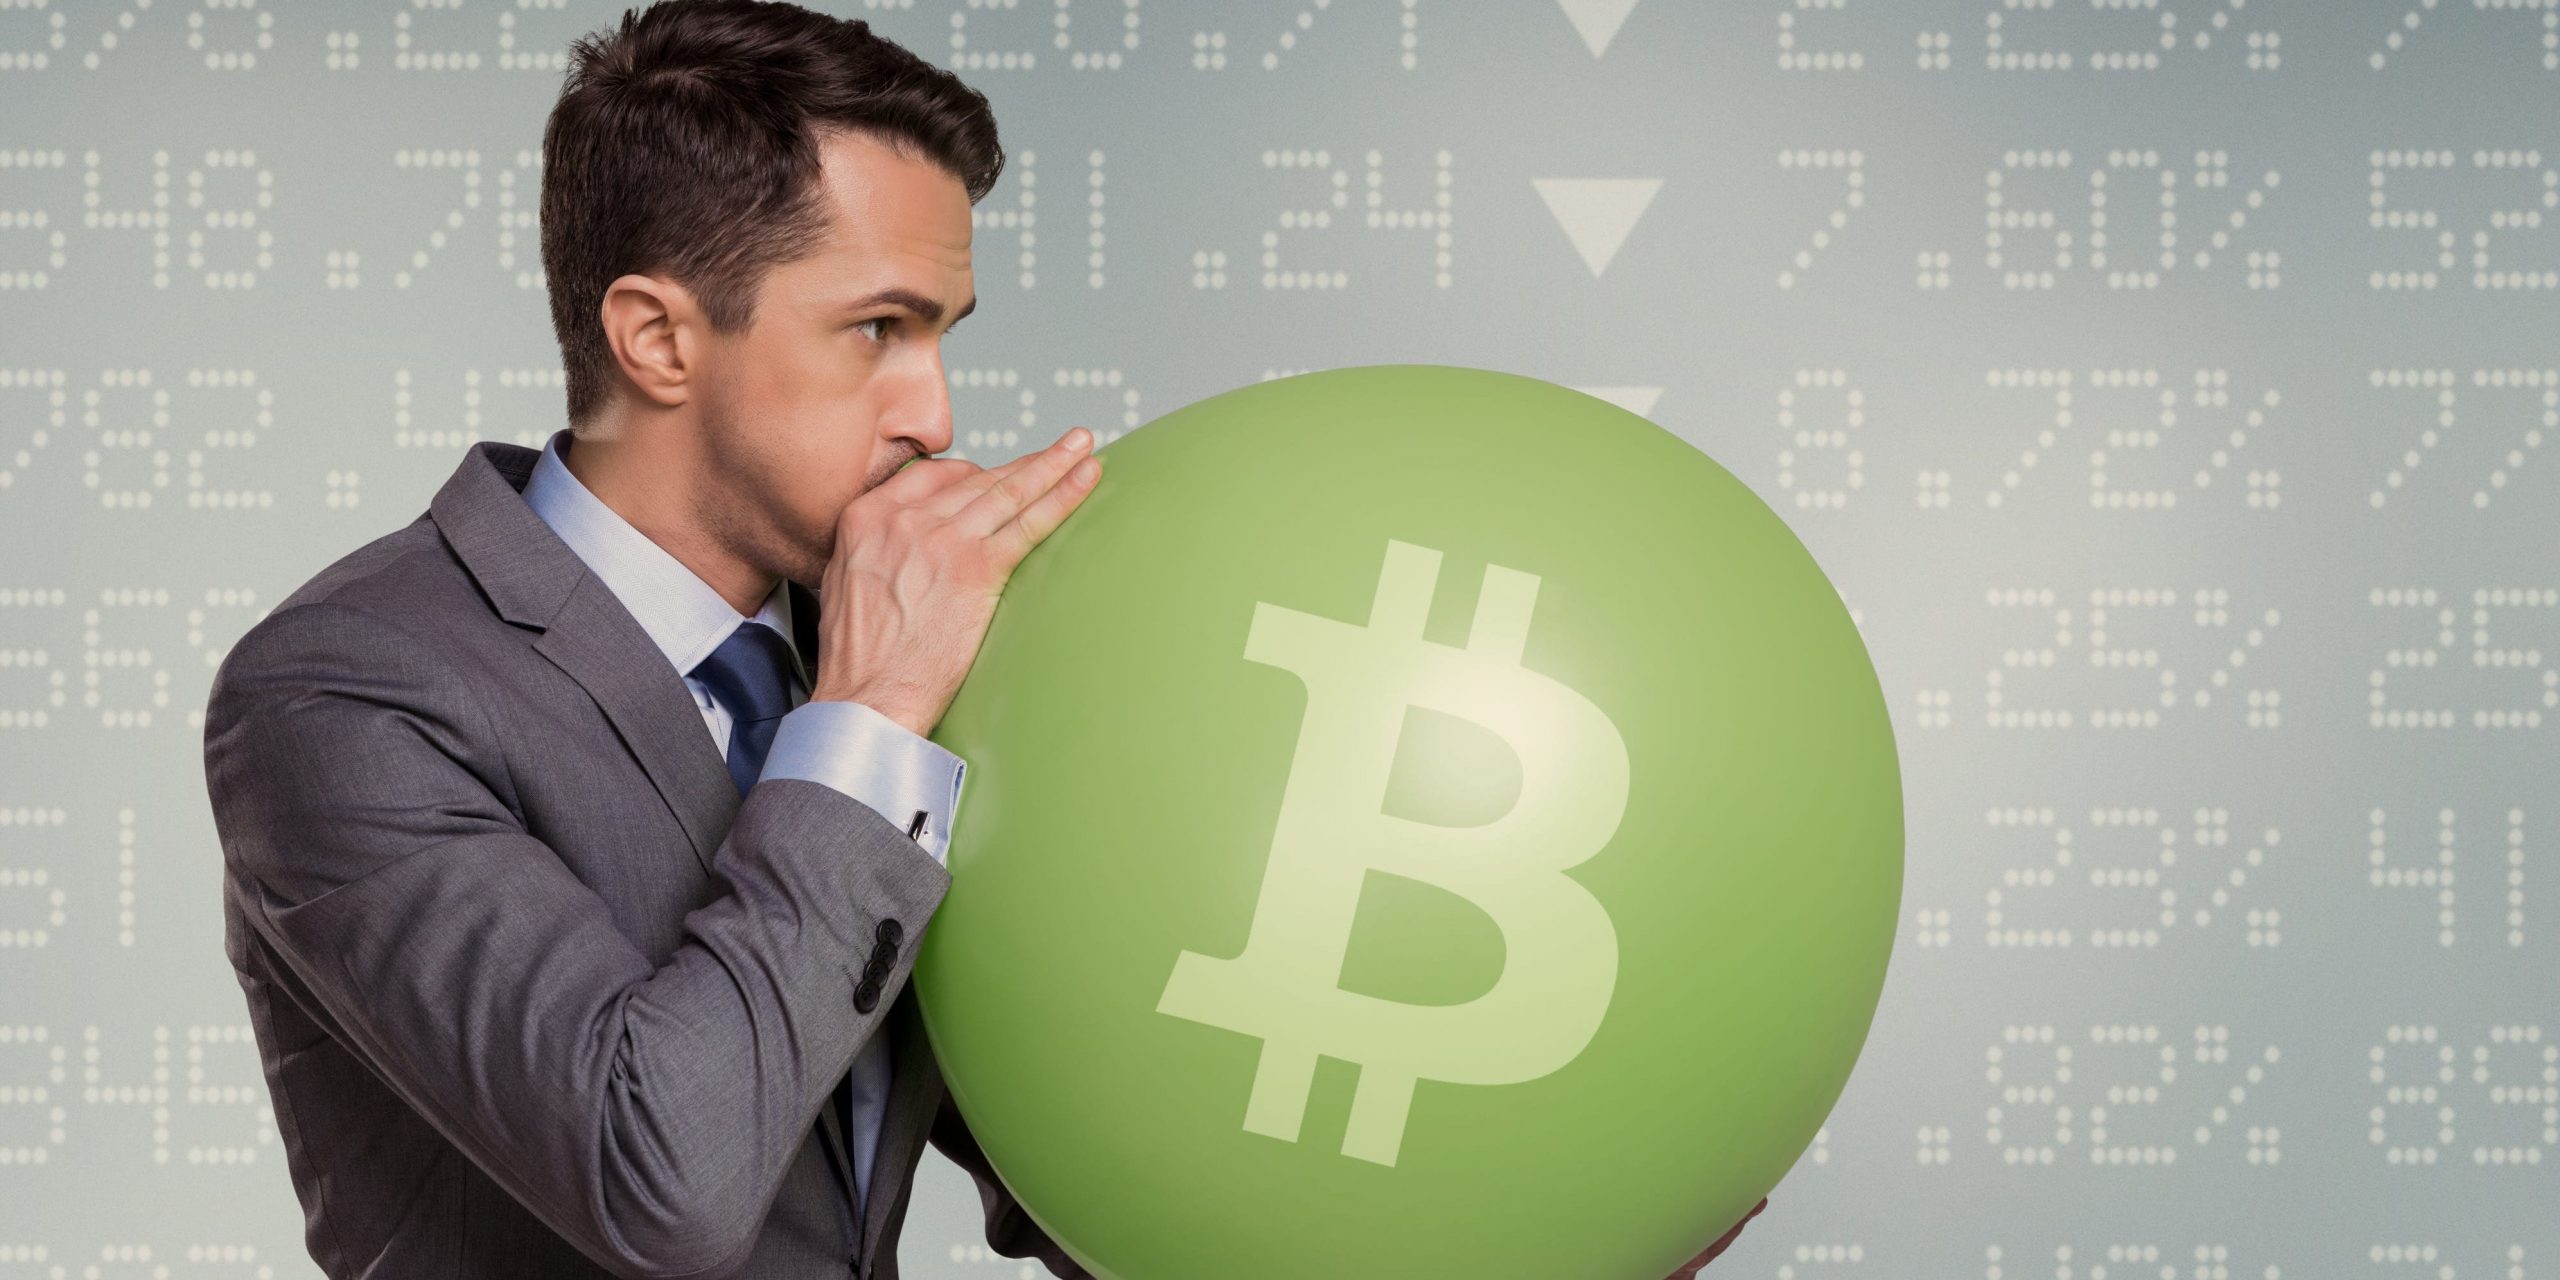 Bitcoin green balloon